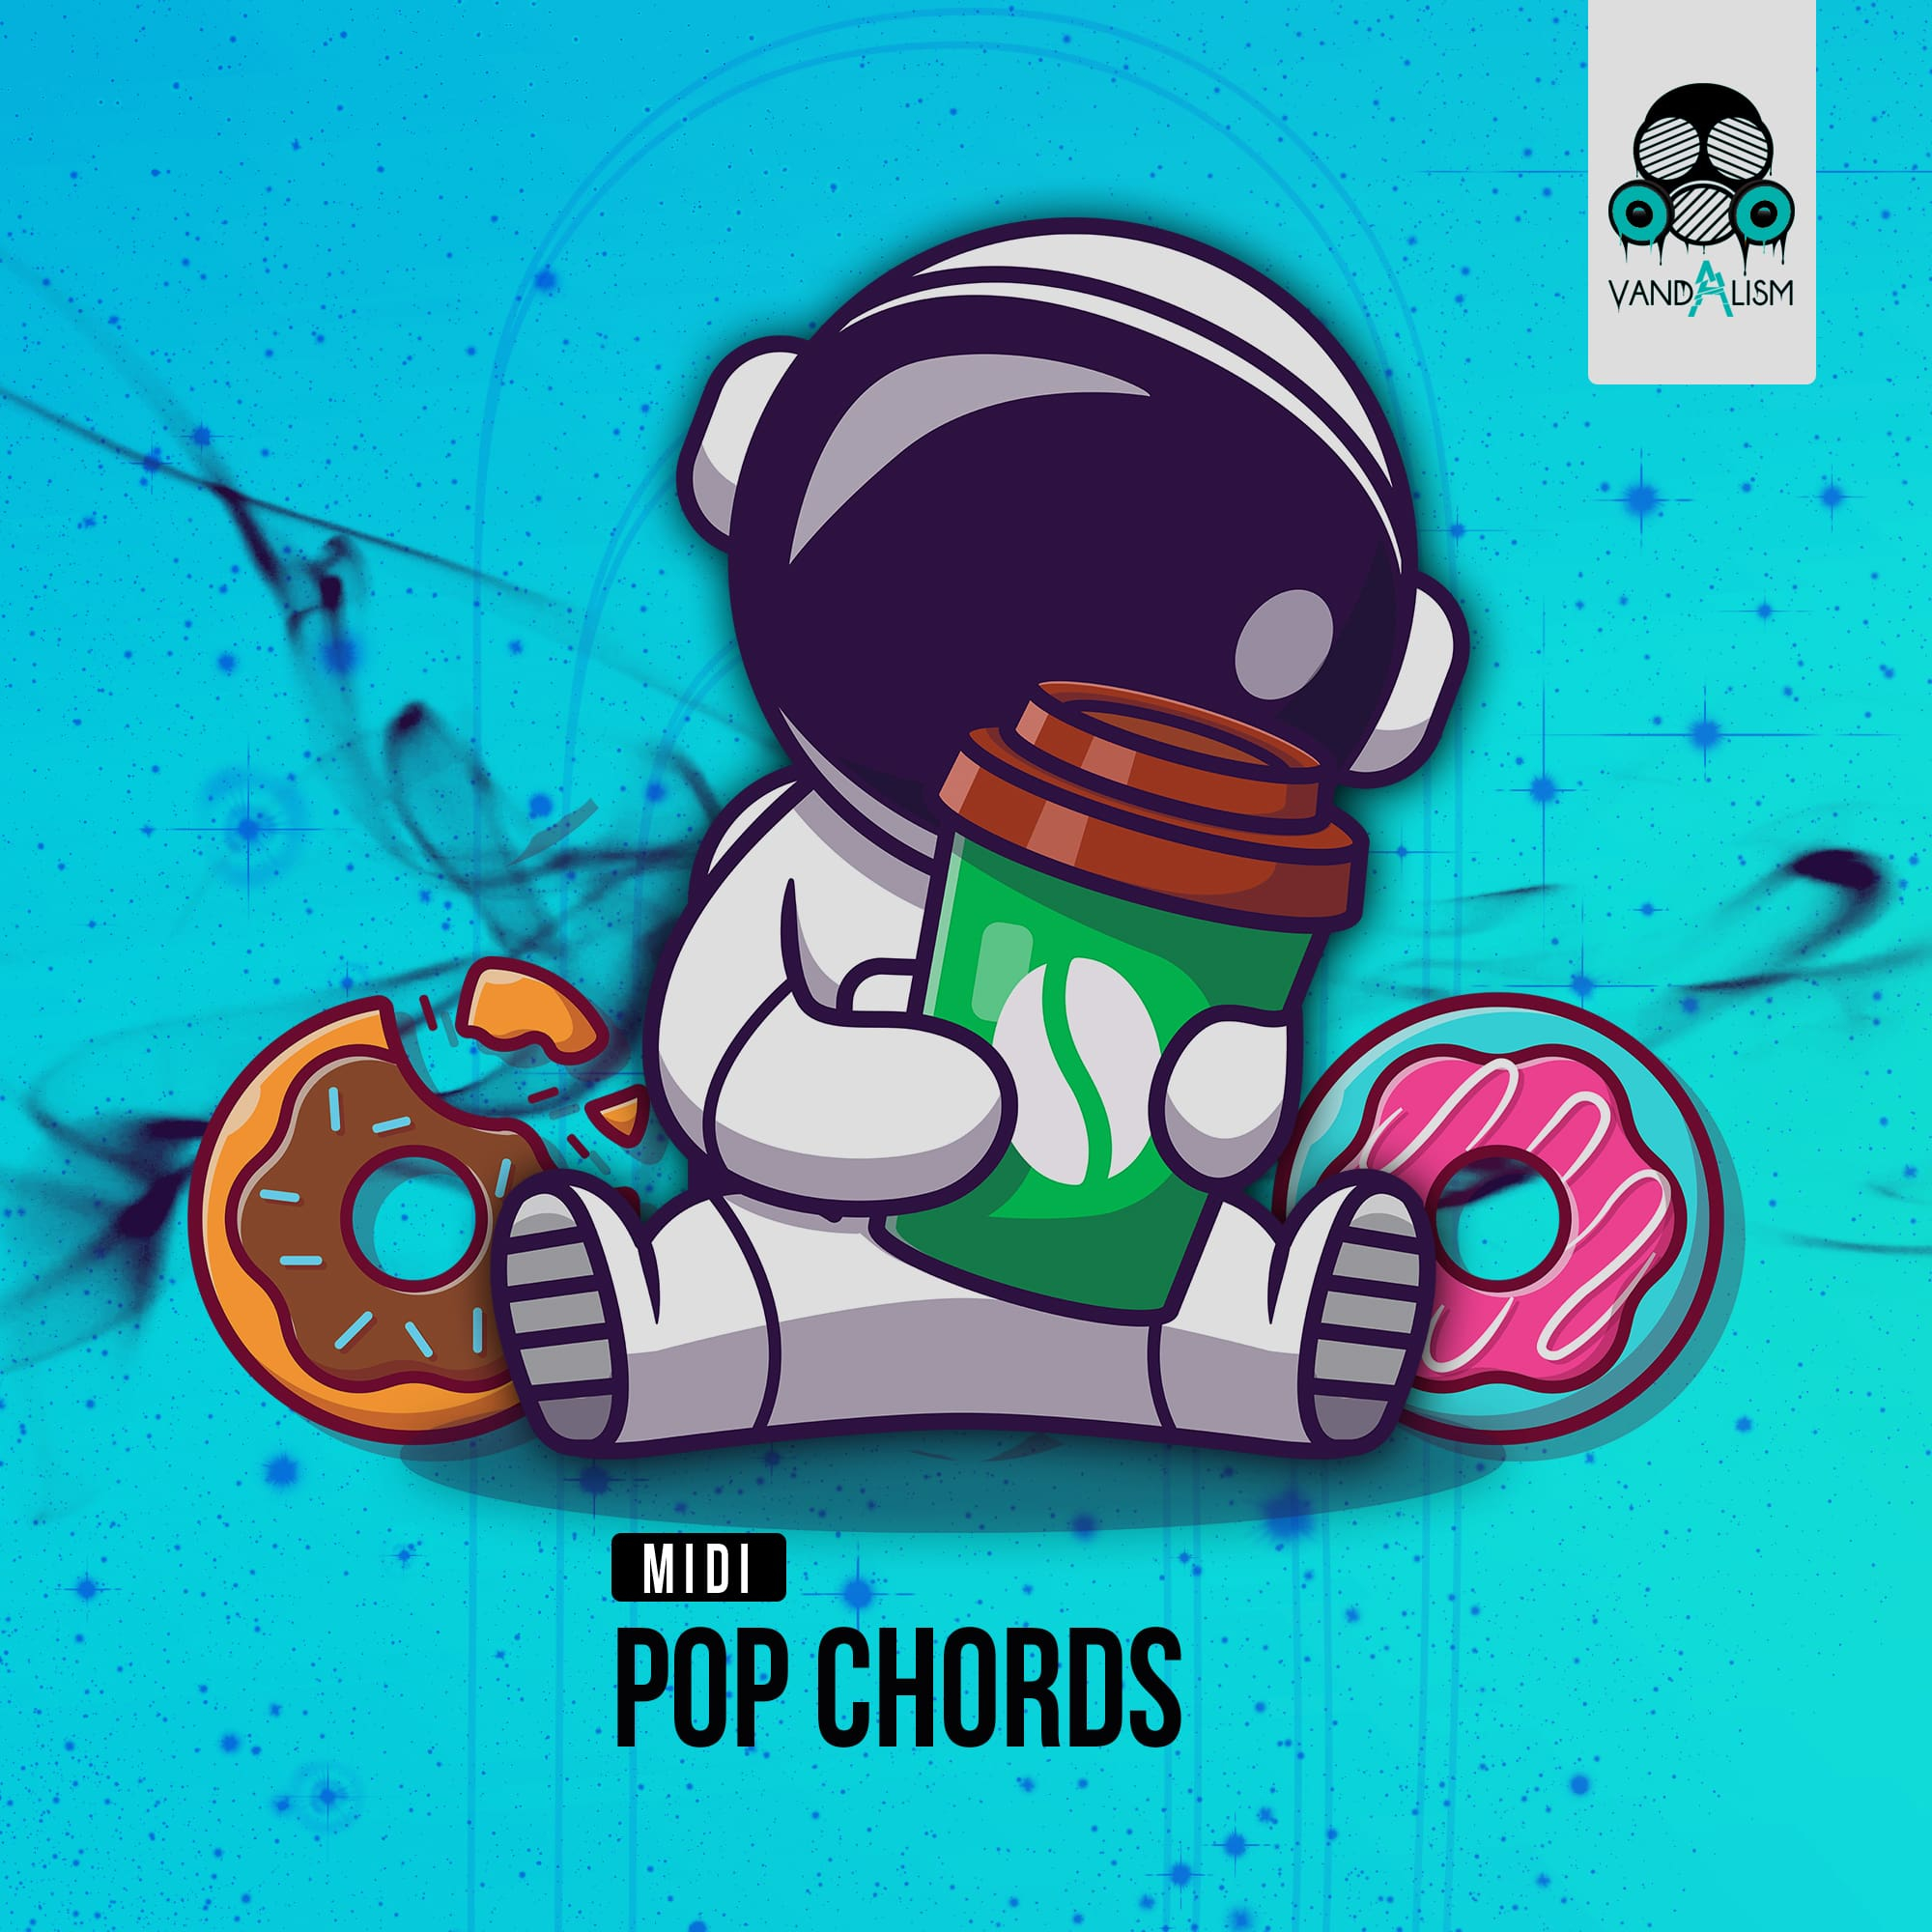 MIDI: Pop Chords